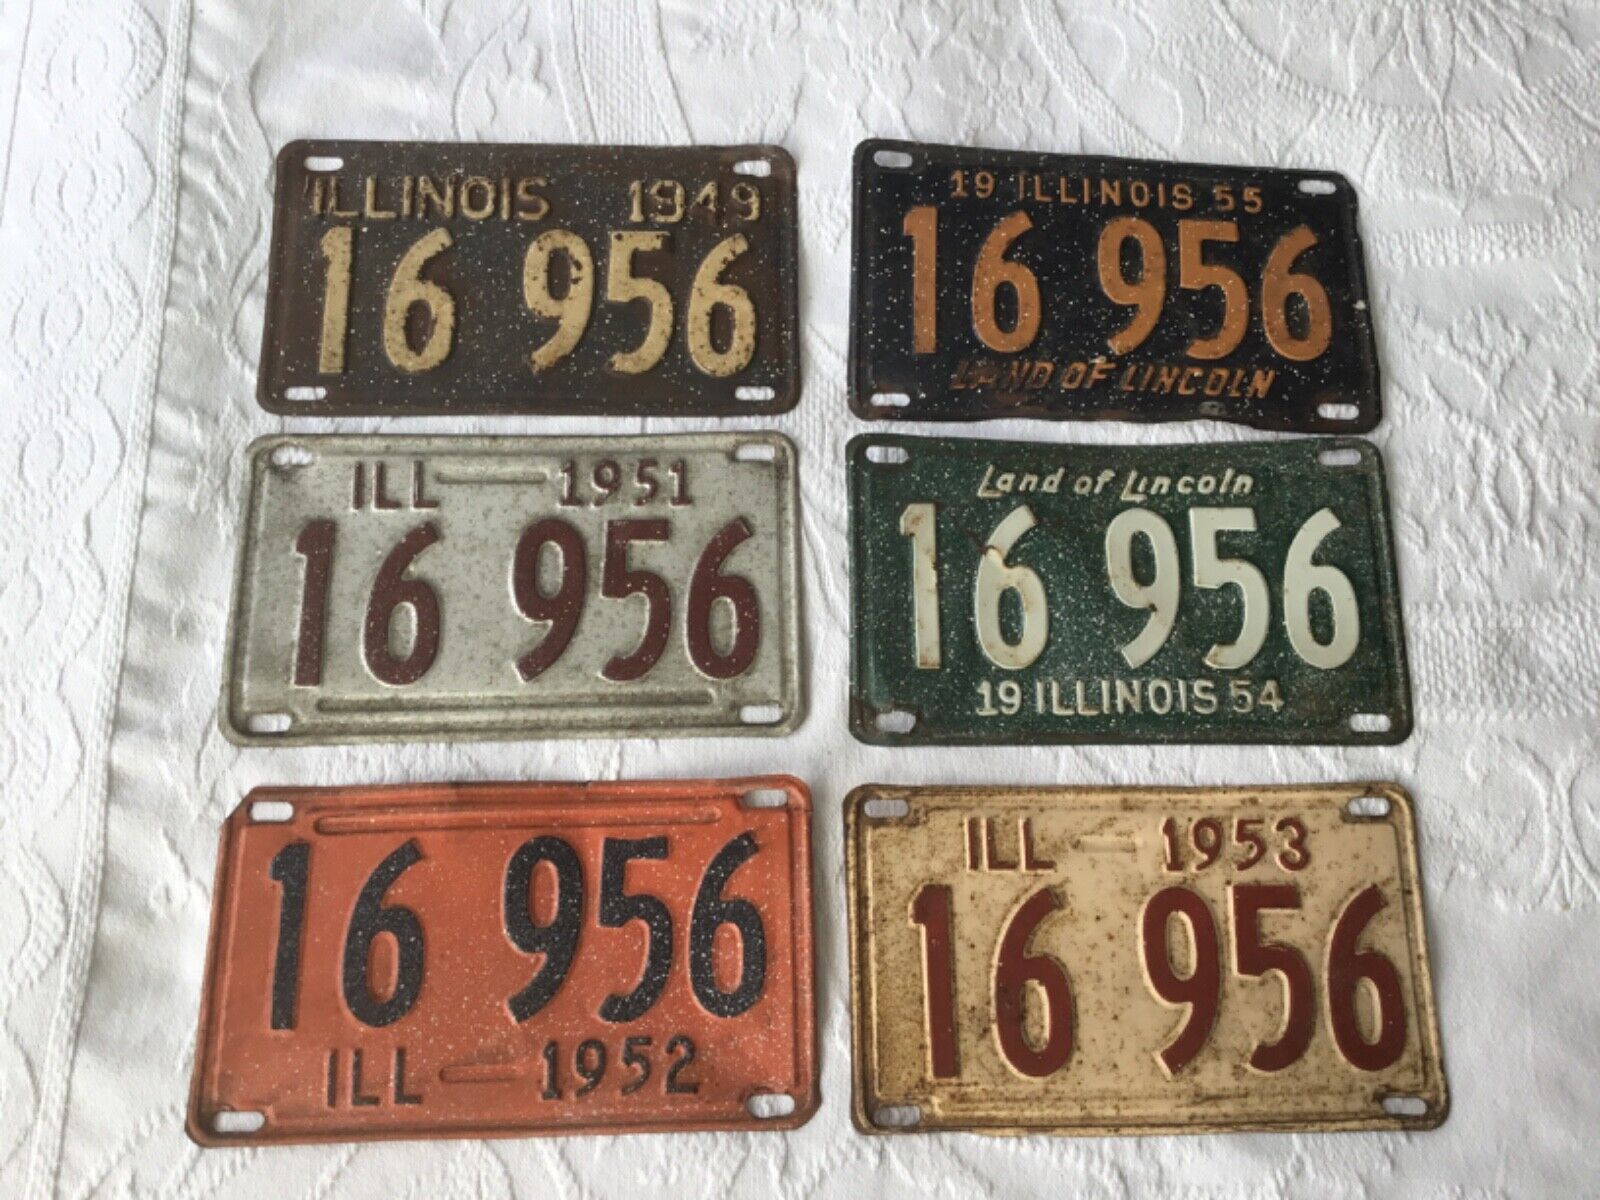 Vintage Illinois License Plates Same Number “16 956” 1949, 1951-1955 Six Total